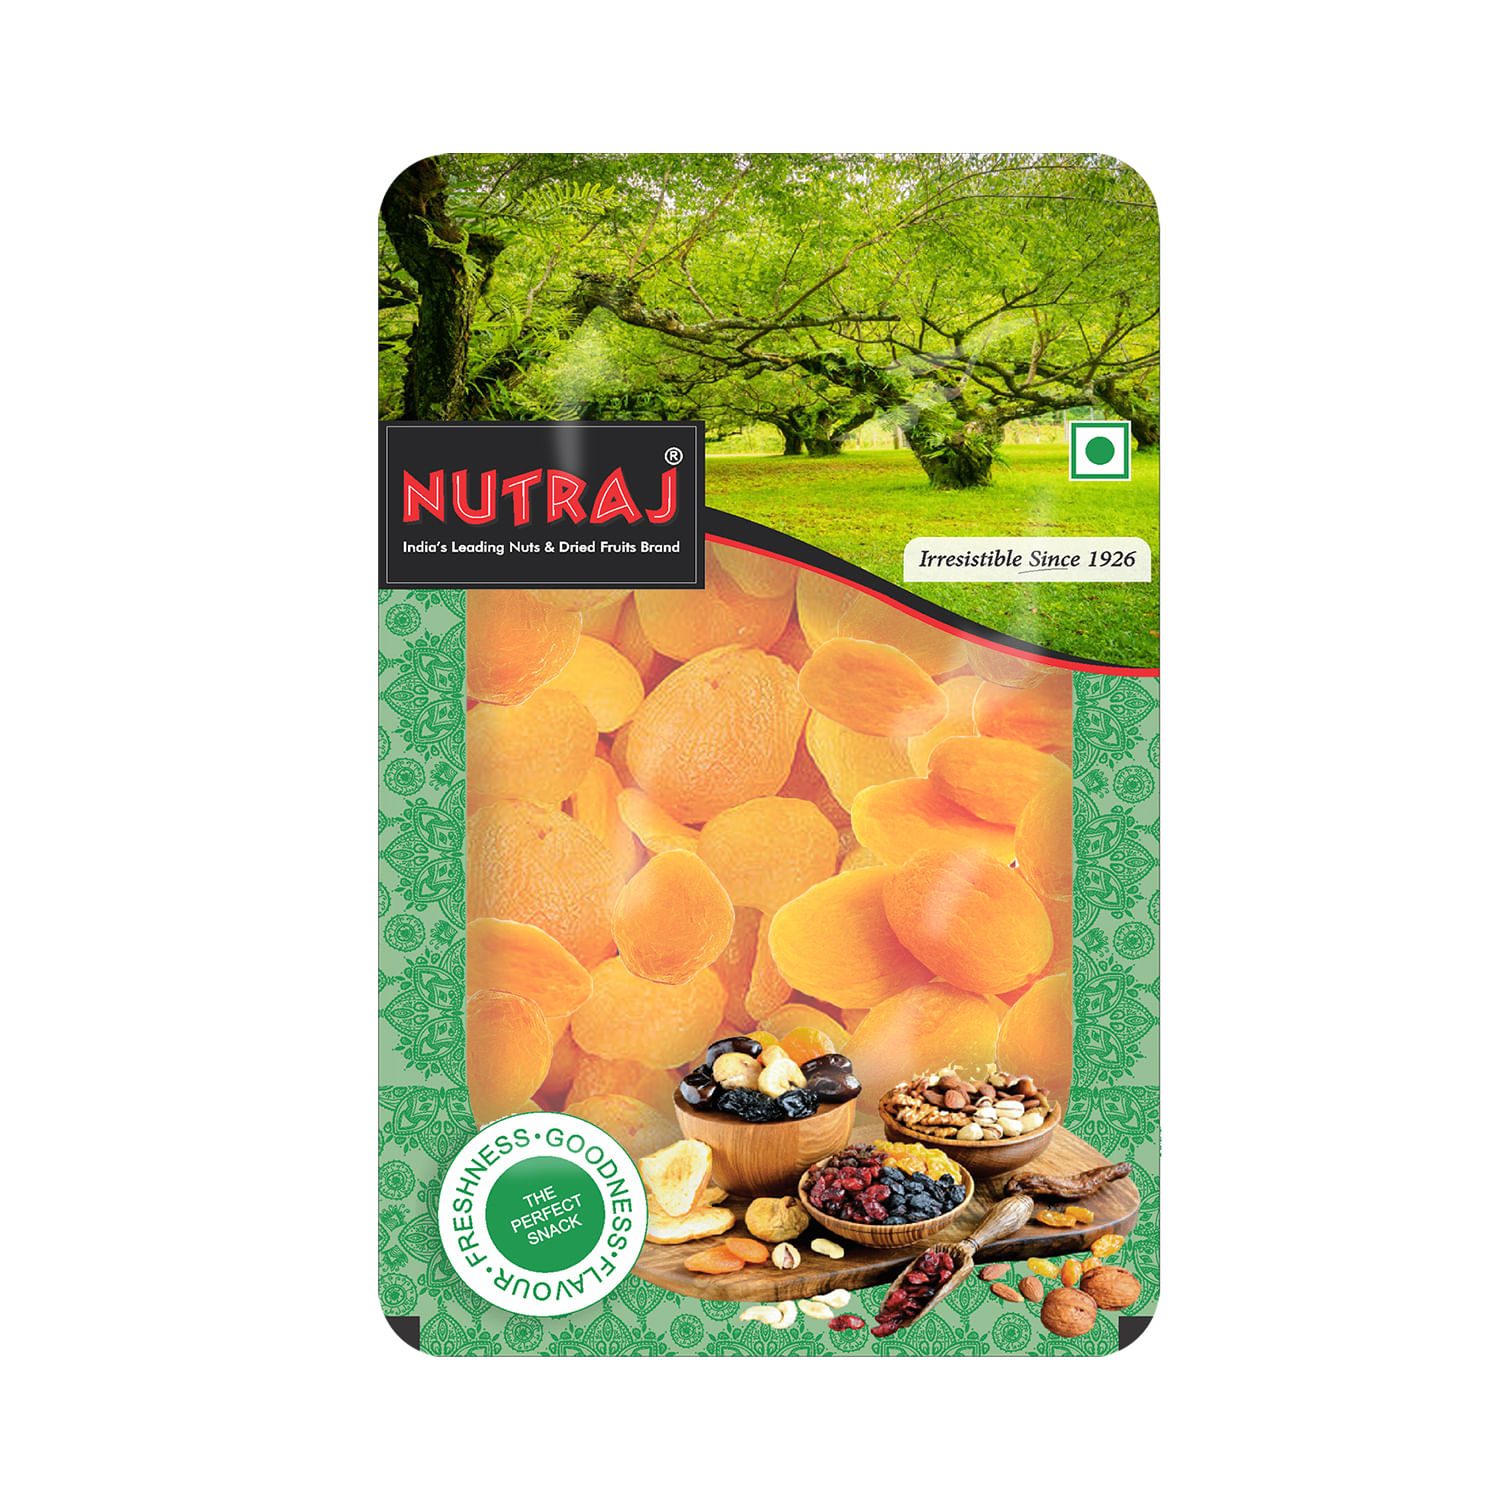 Nutraj Premium Dried Pitted Turkish Apricots 800g Tray (4 X 200g)